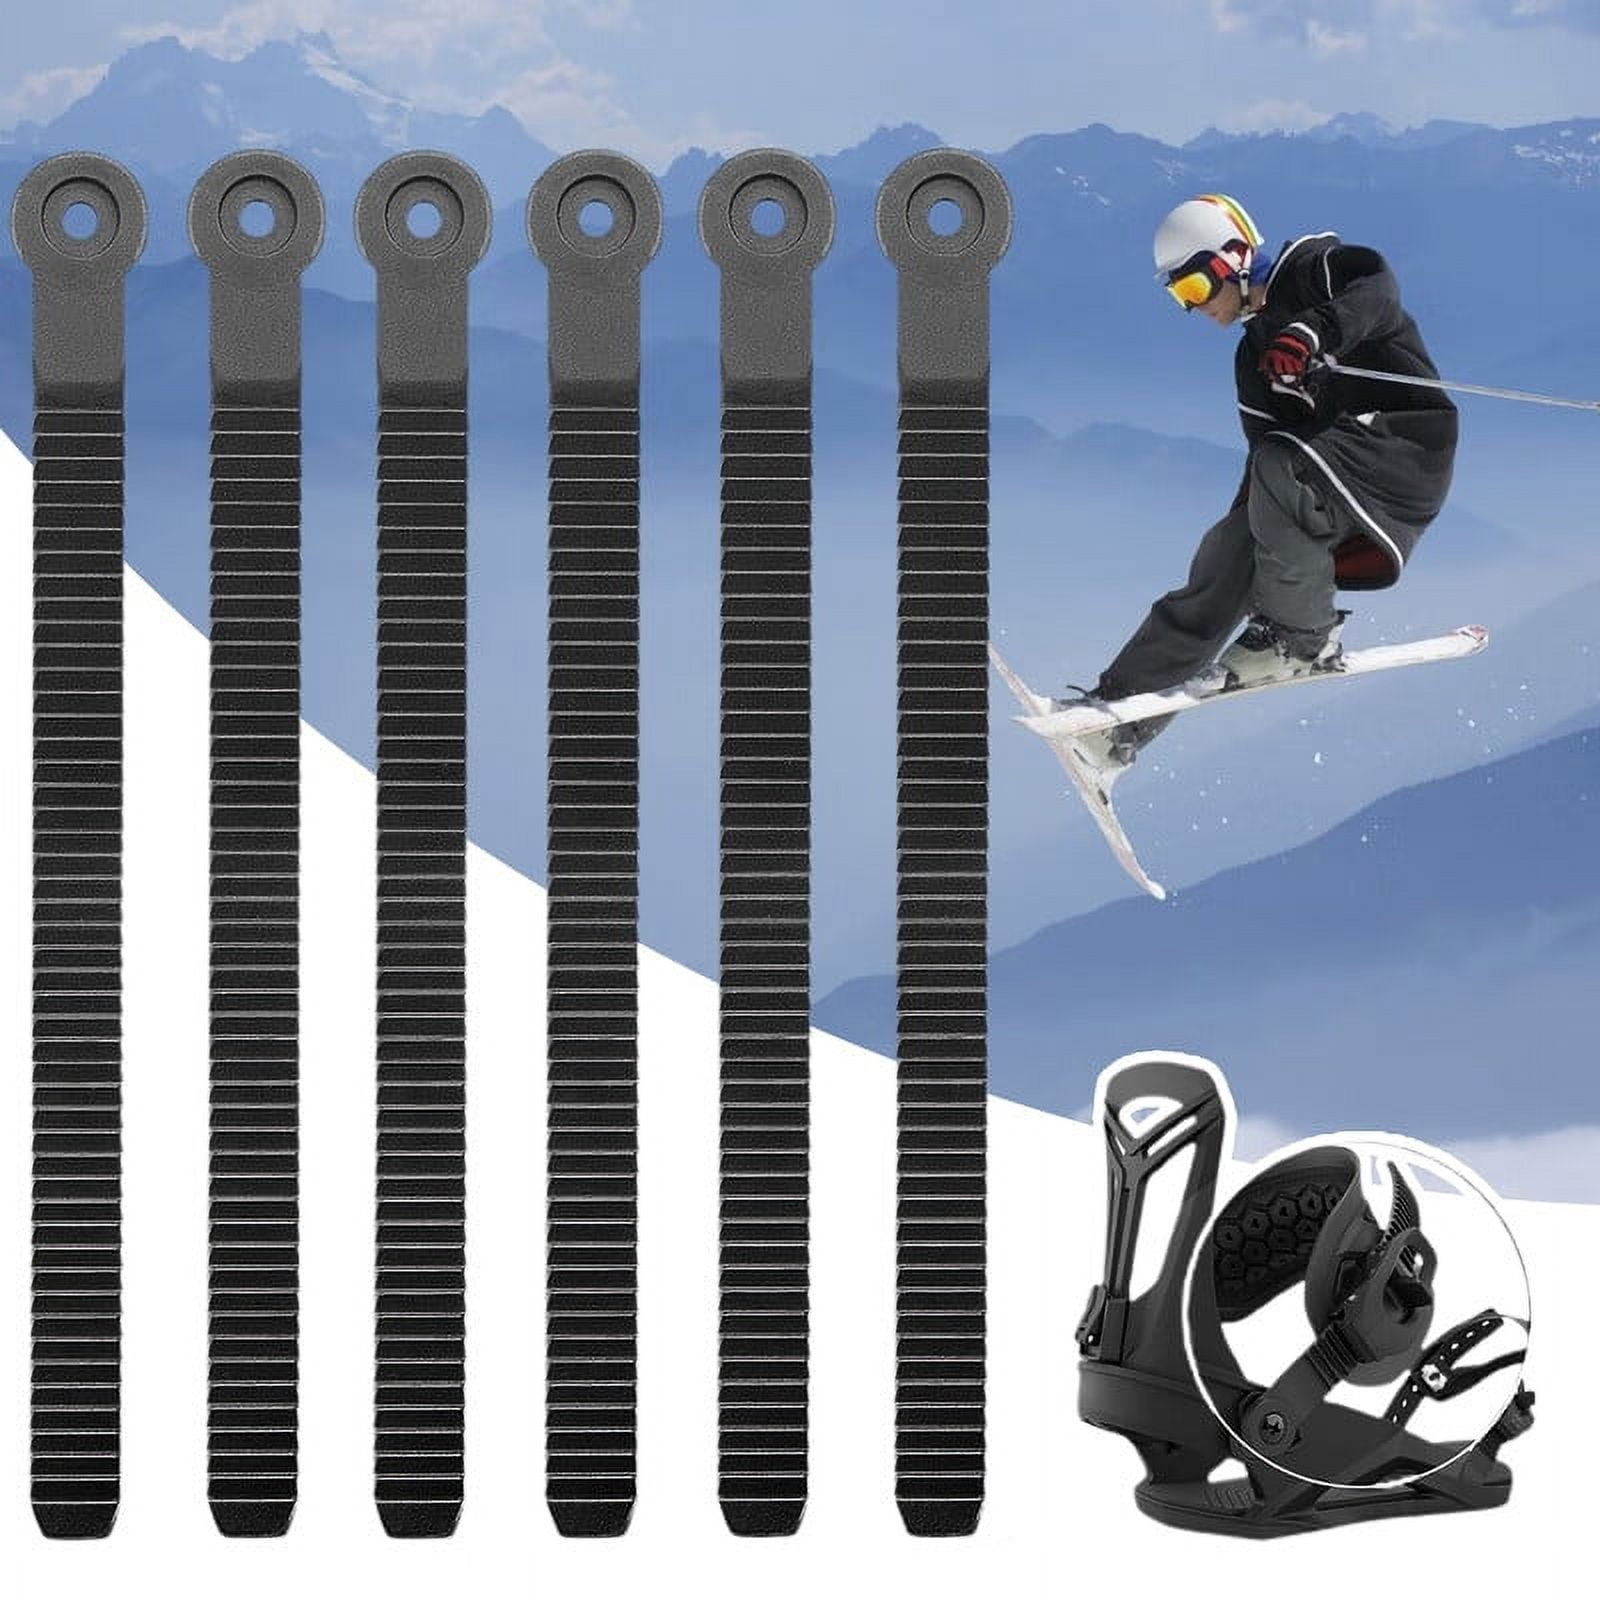 Flux Snowboard Bindings - Ankle Ladder Straps